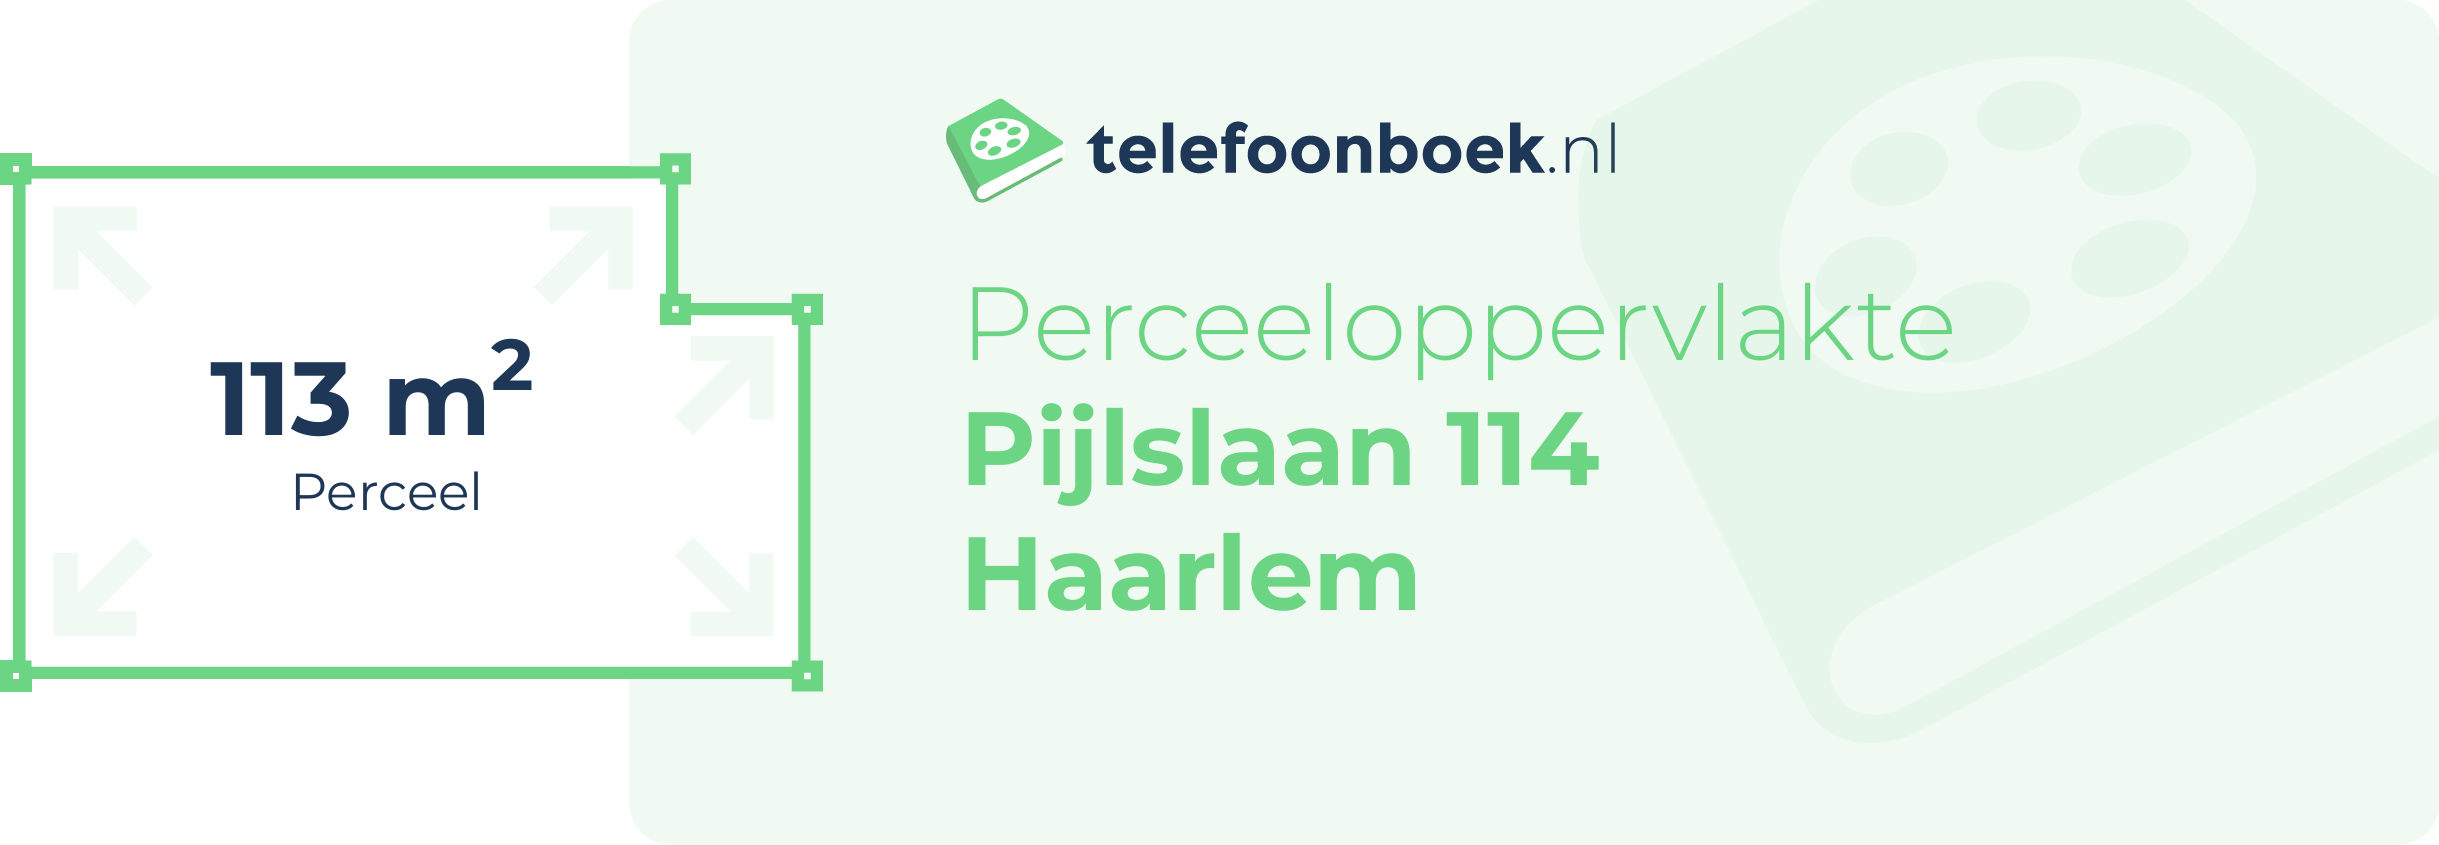 Perceeloppervlakte Pijlslaan 114 Haarlem